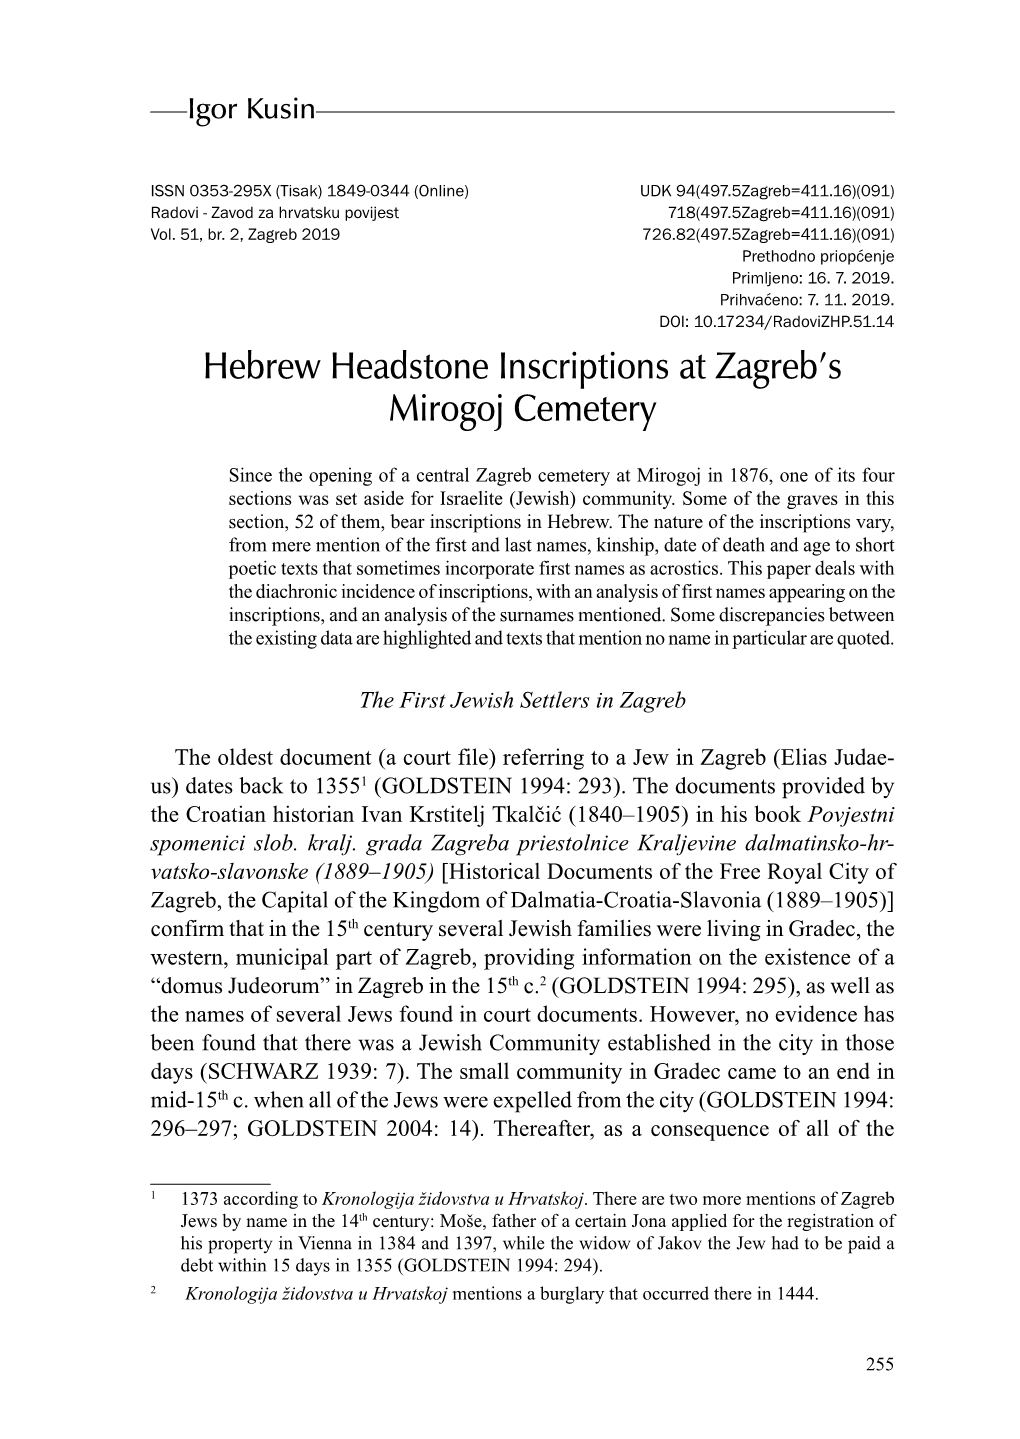 Hebrew Headstone Inscriptions at Zagreb's Mirogoj Cemetery